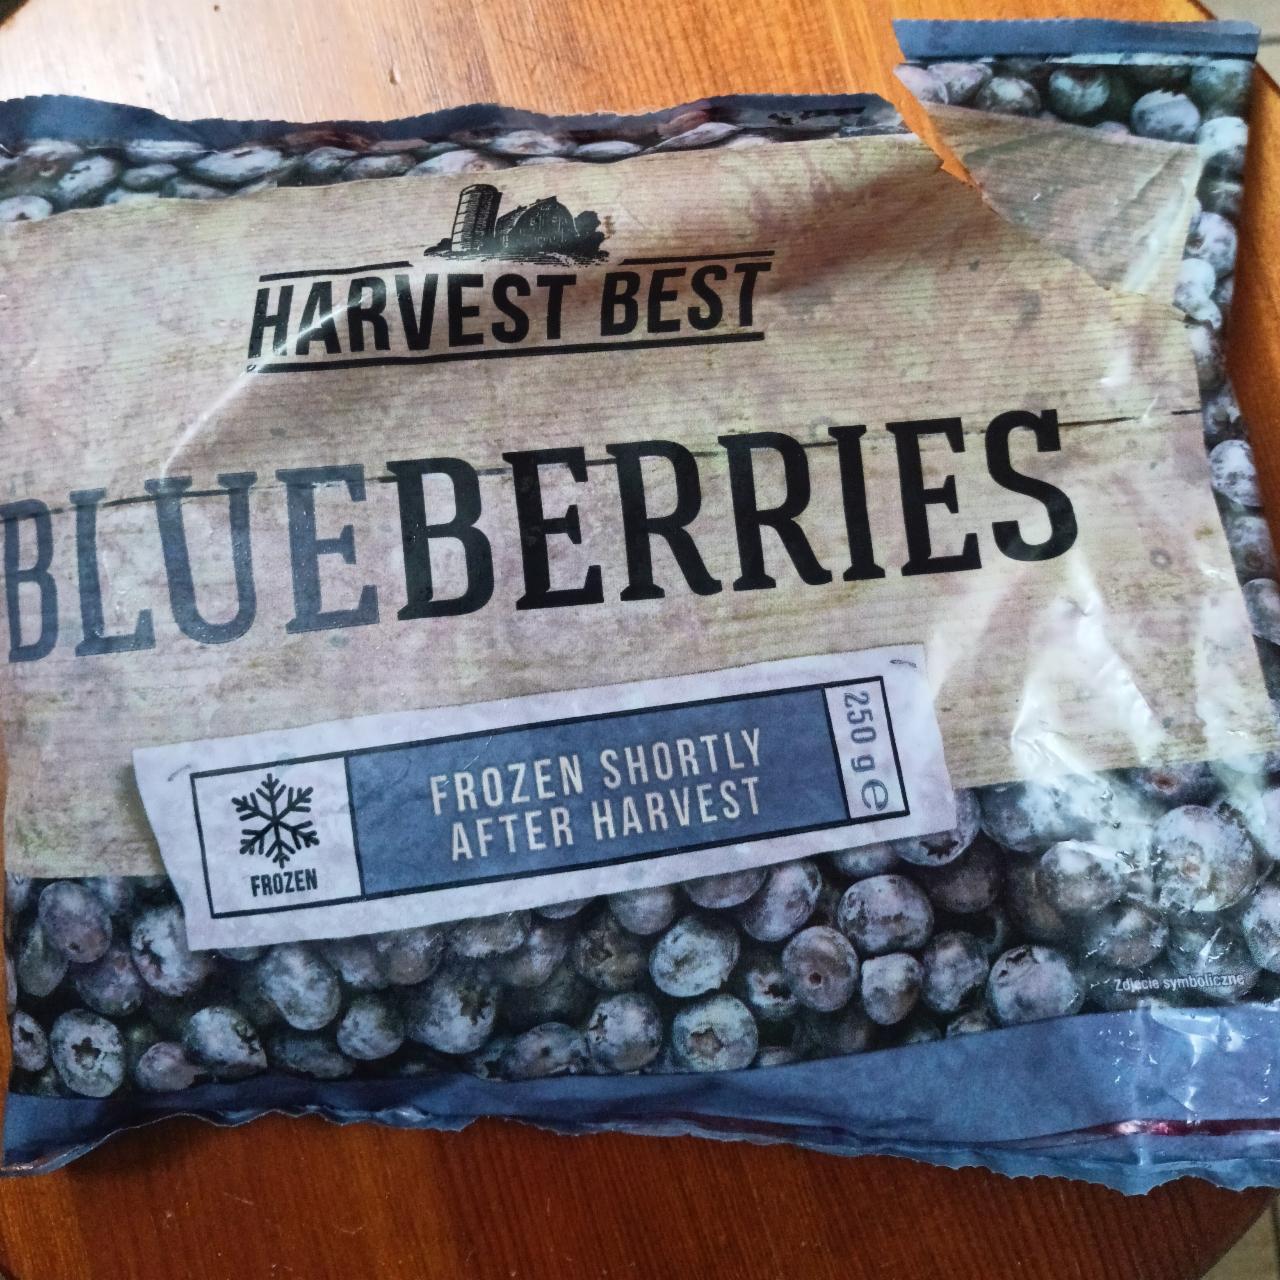 Zdjęcia - blueberries frozen Harvest Best